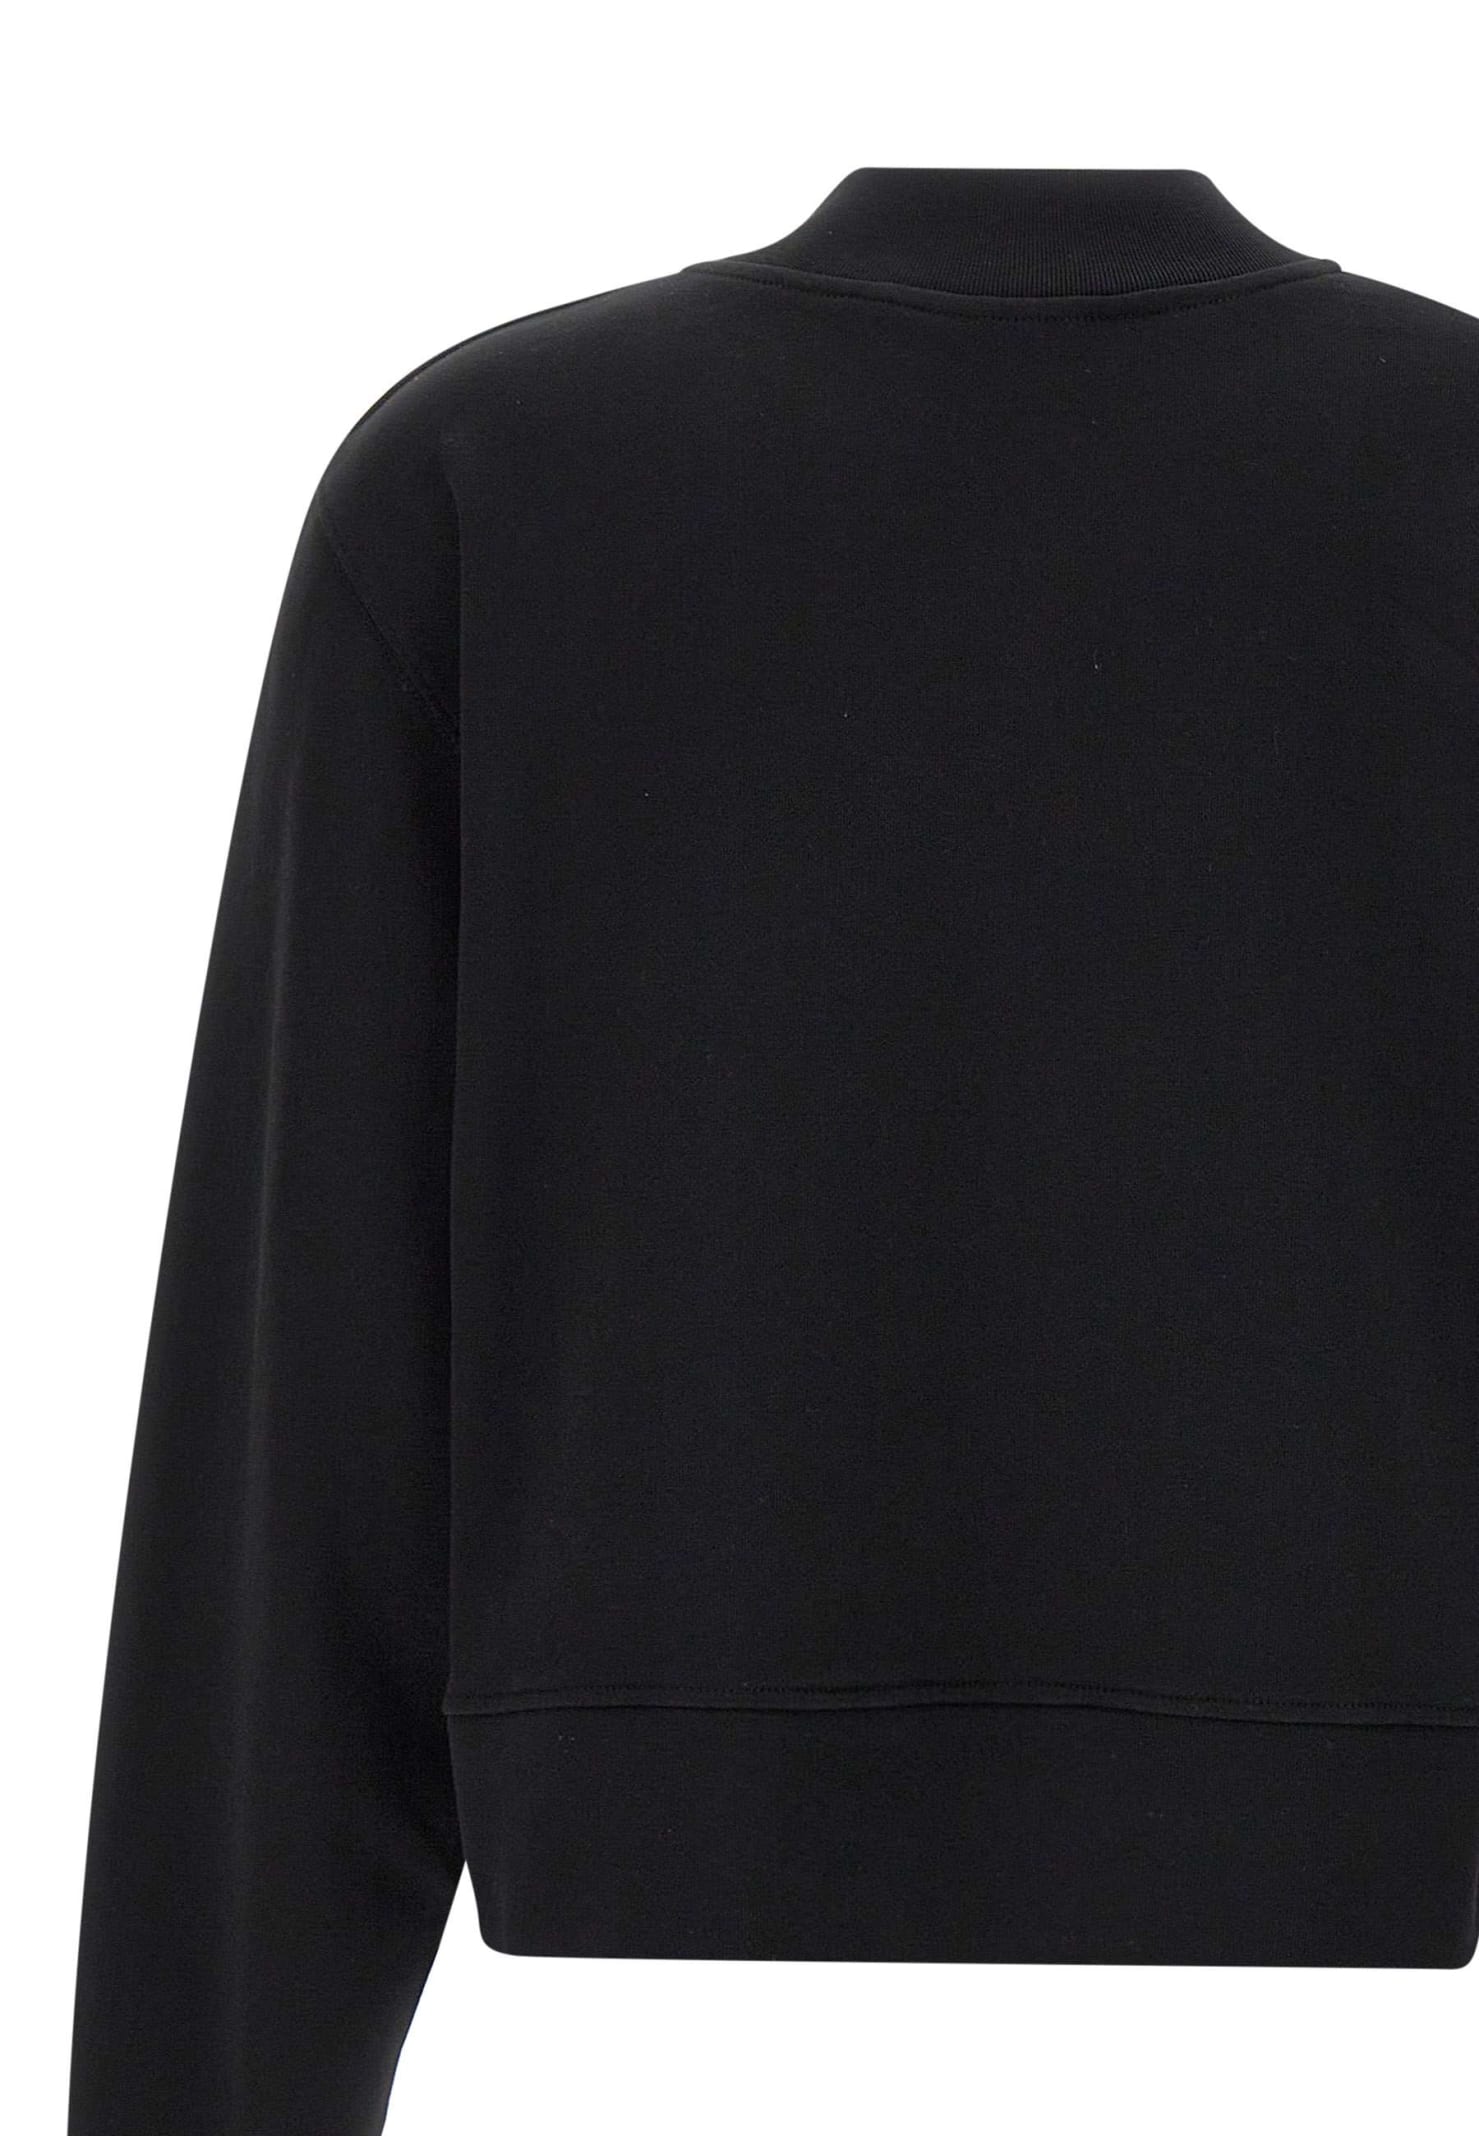 Shop Palm Angels Sunsets Cotton Sweatshirt In Black Whit